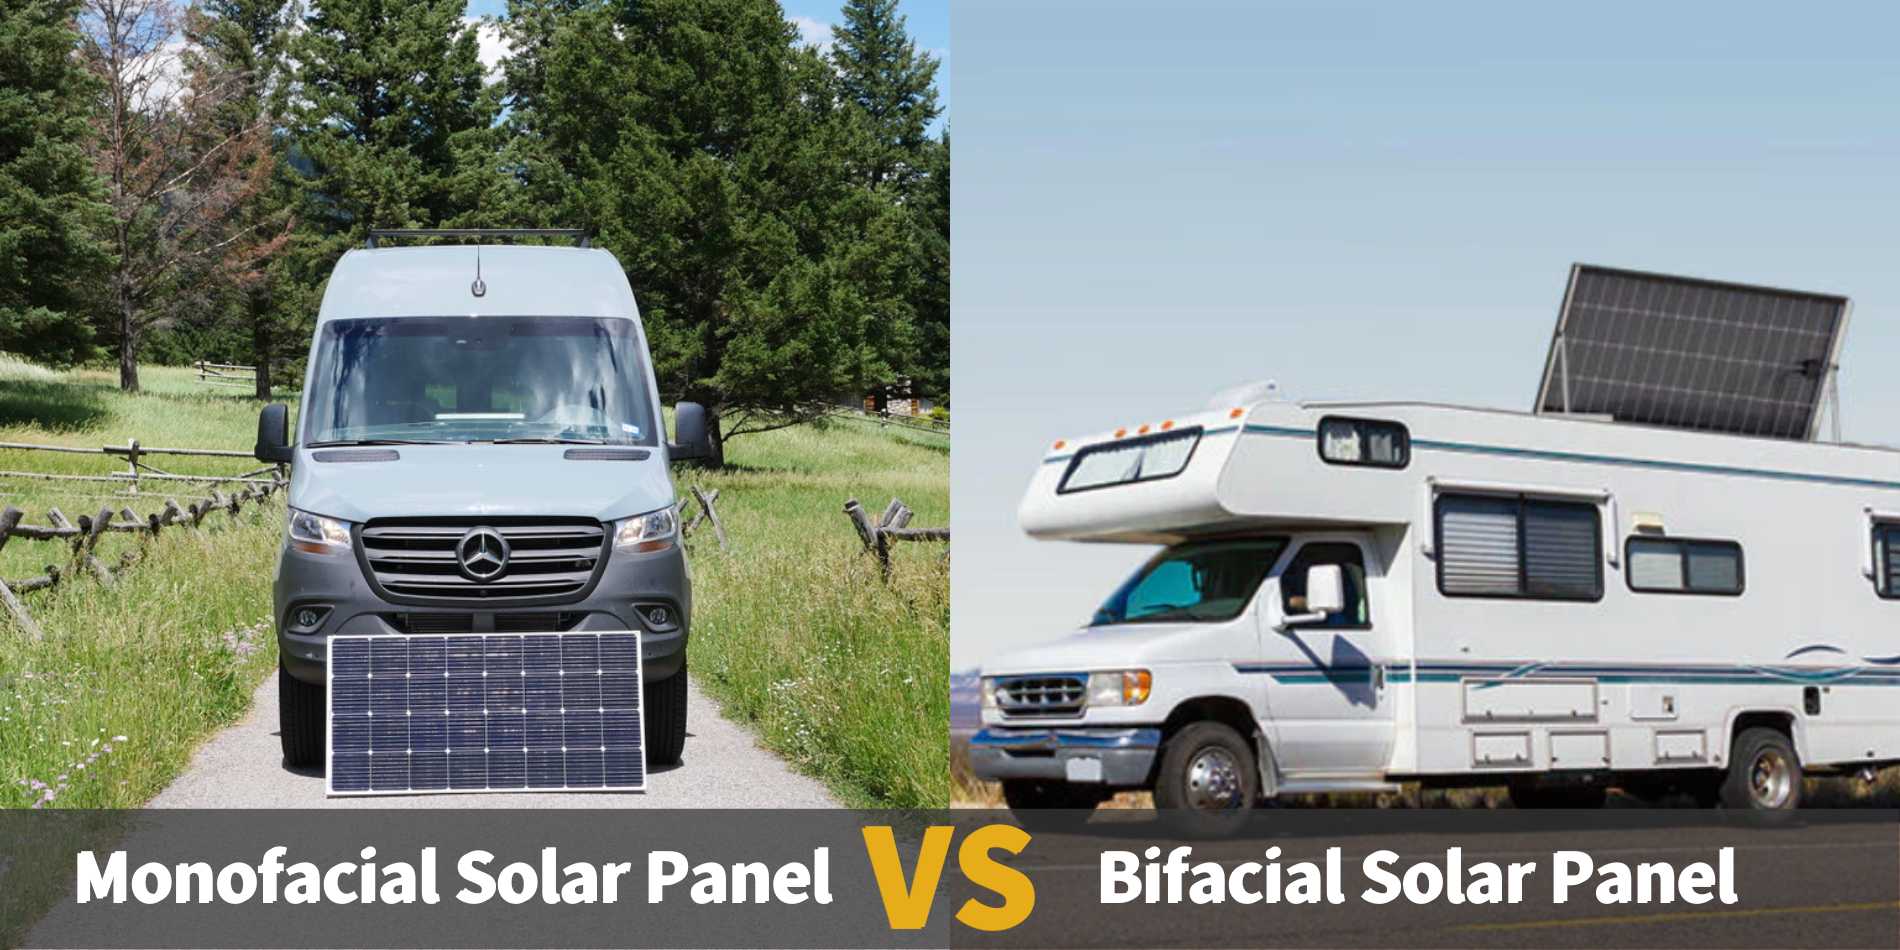 Monfacial solar panel vs. bifacial solar panel